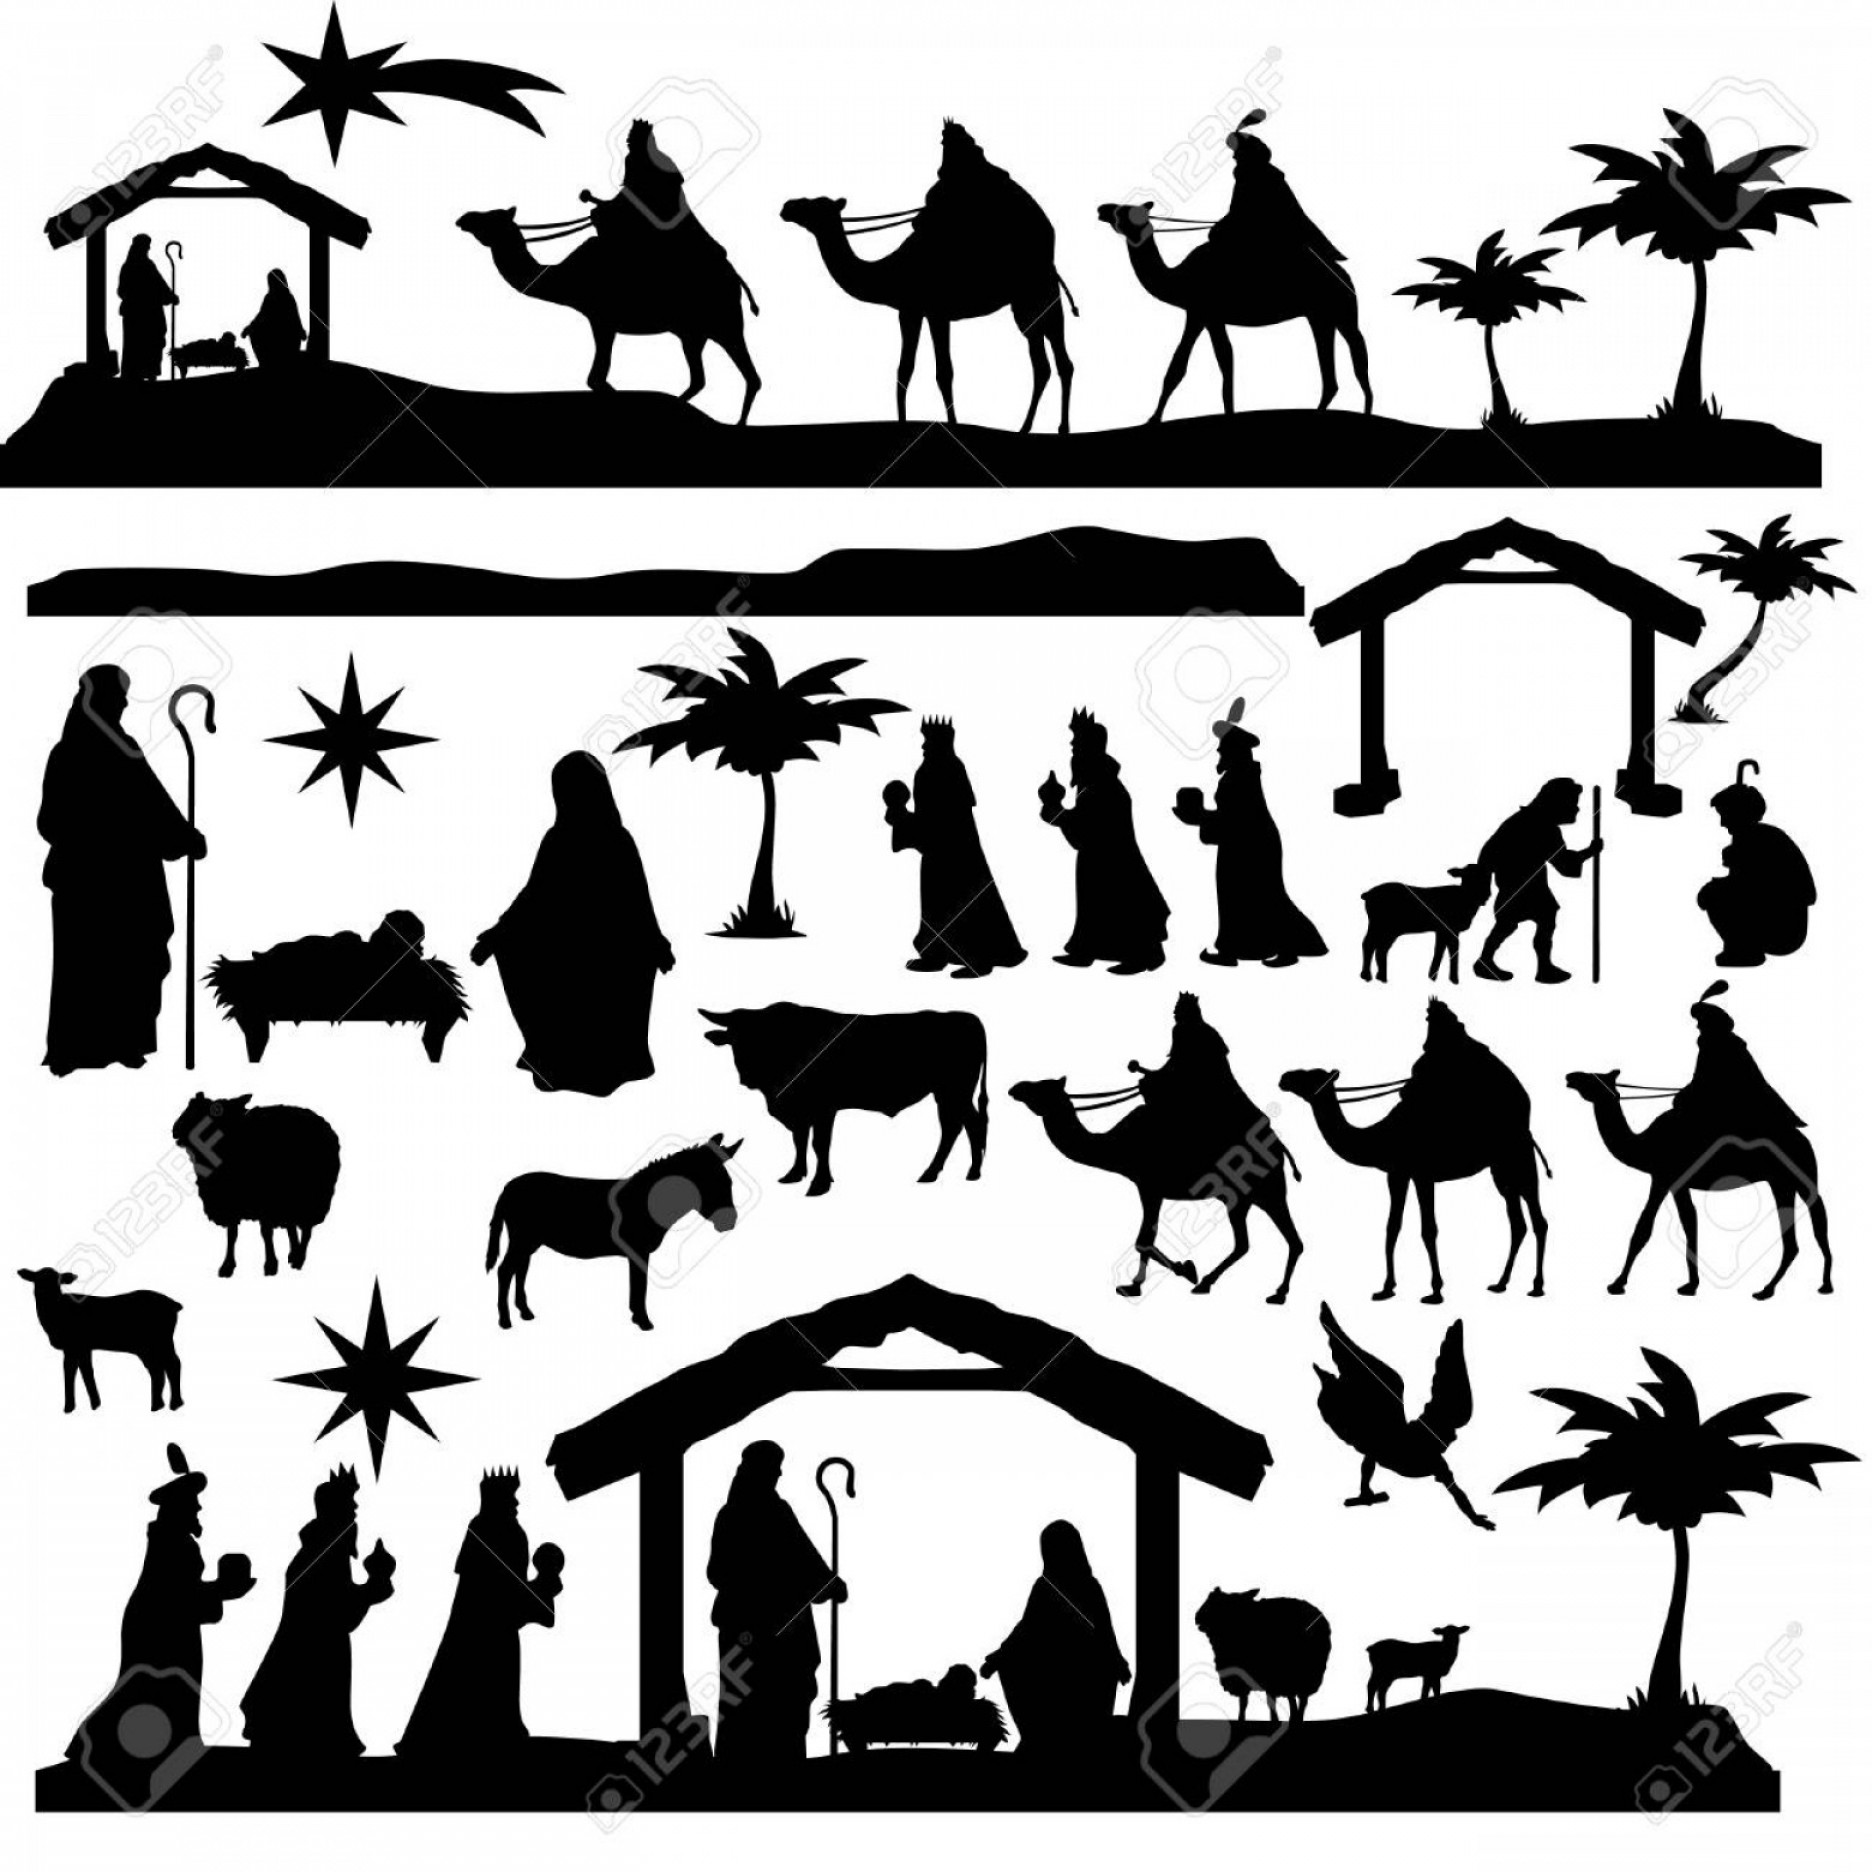 Download Nativity Scene Silhouette Vector at Vectorified.com ...